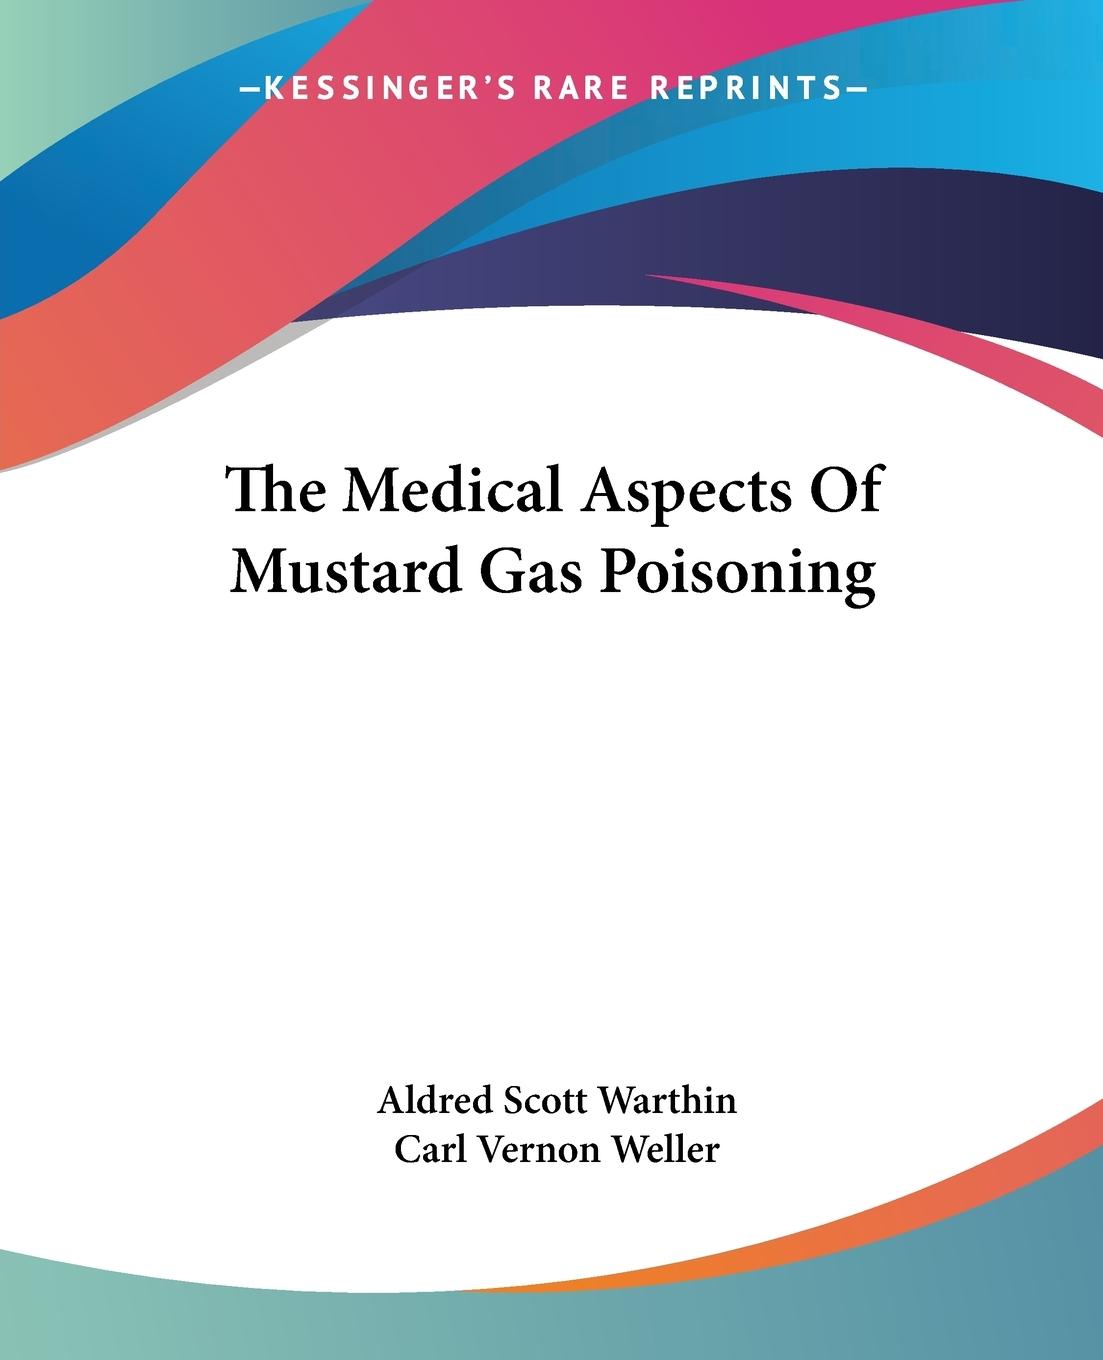 The Medical Aspects Of Mustard Gas Poisoning / Carl Vernon Weller / Taschenbuch / Paperback / Englisch / 2007 / Kessinger Publishing, LLC / EAN 9781430477051 - Weller, Carl Vernon